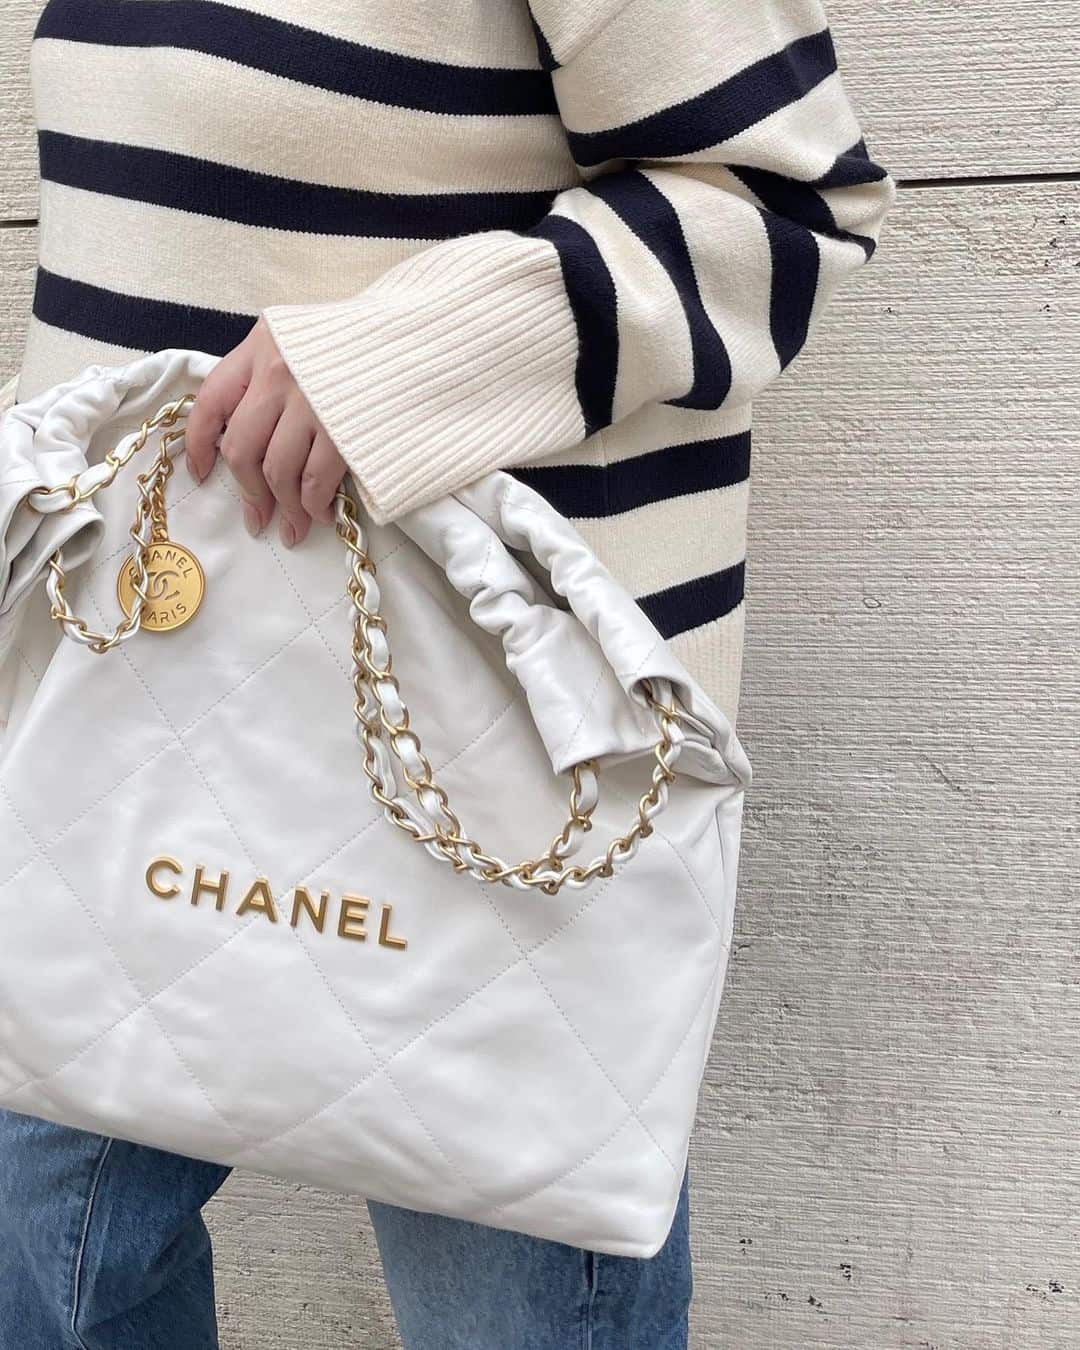 Where Should You Buy Chanel Bag In Europe  Bragmybag